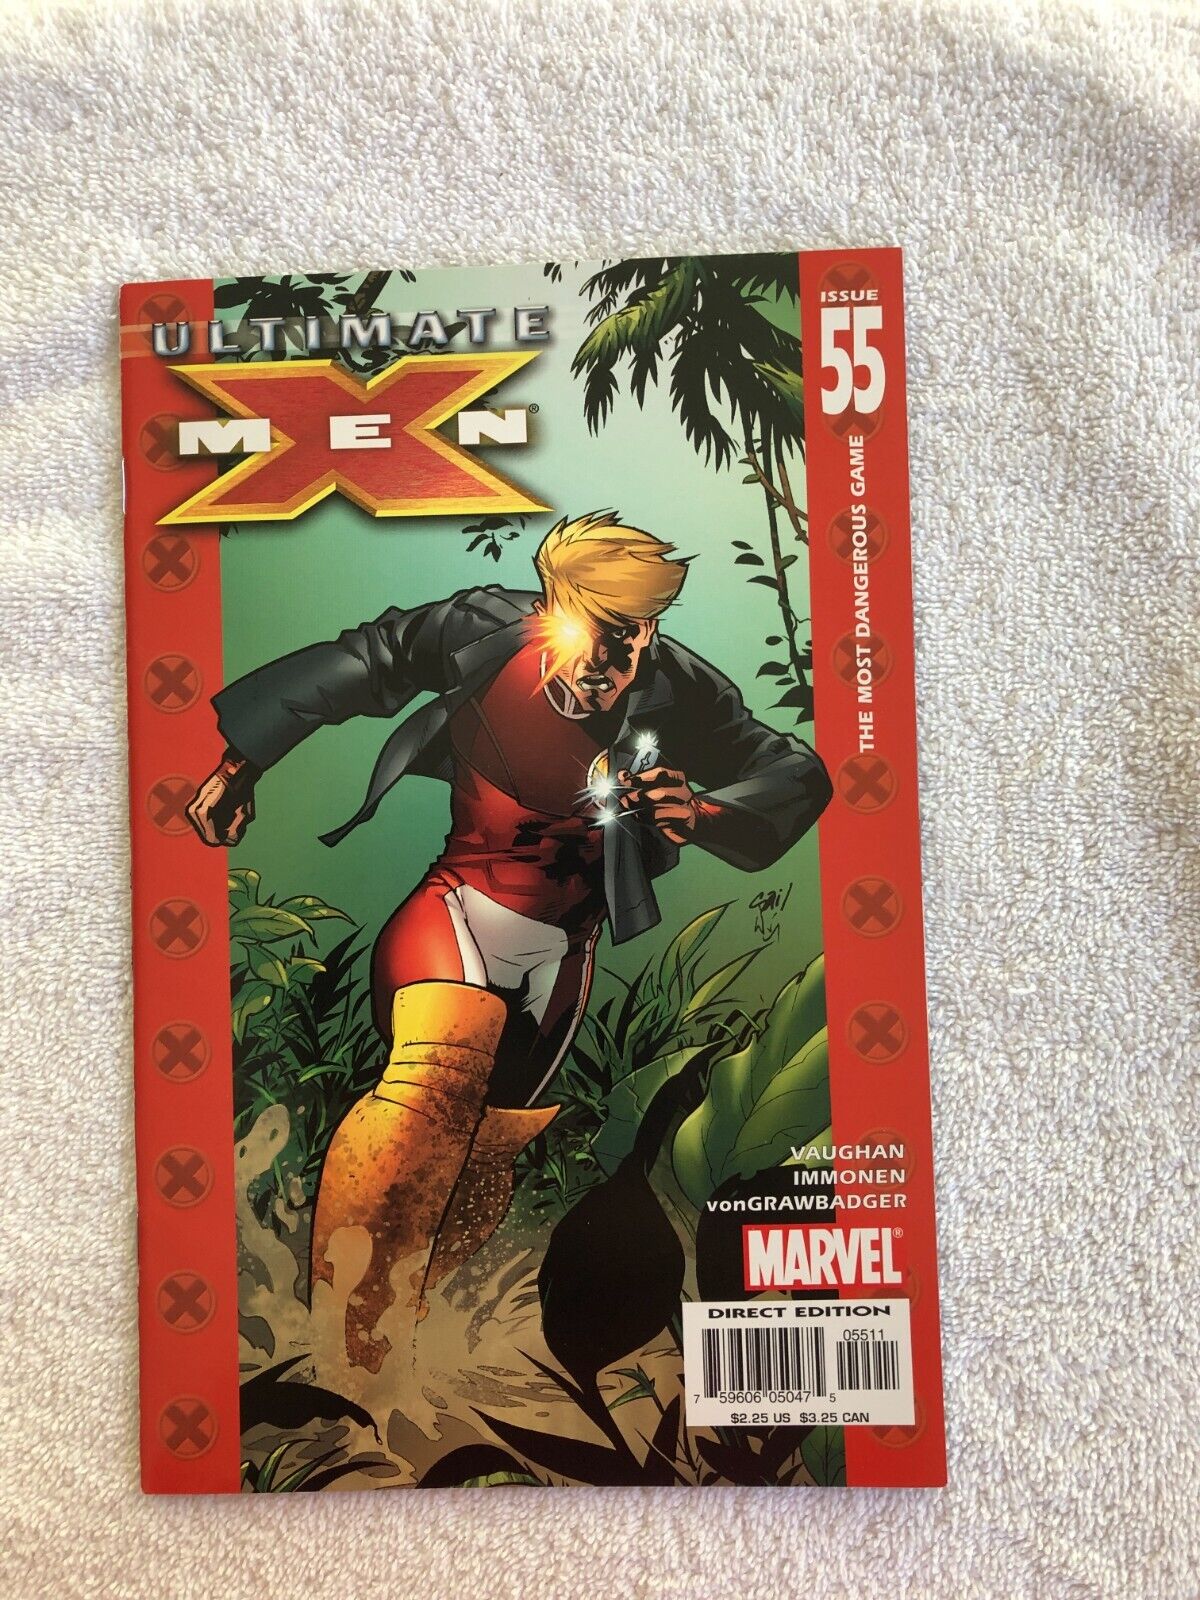 Ultimate X-Men #55 (Mar 2005, Marvel) VF+ 8.5